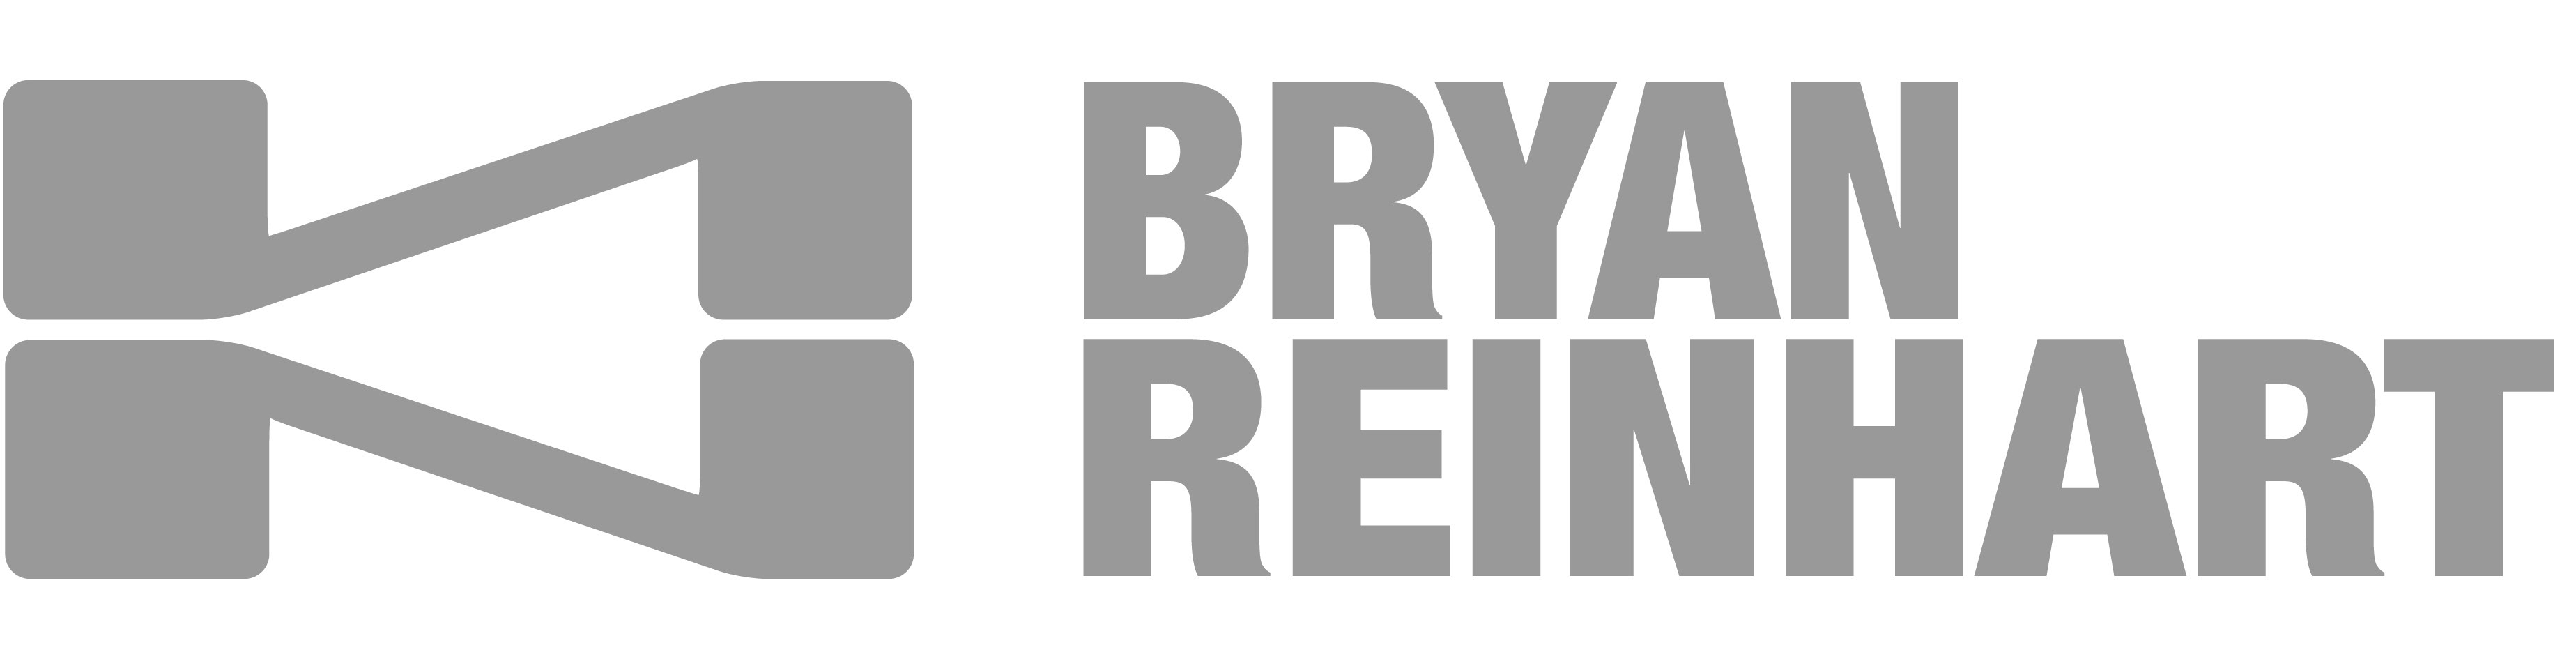 Bryan Reinhart